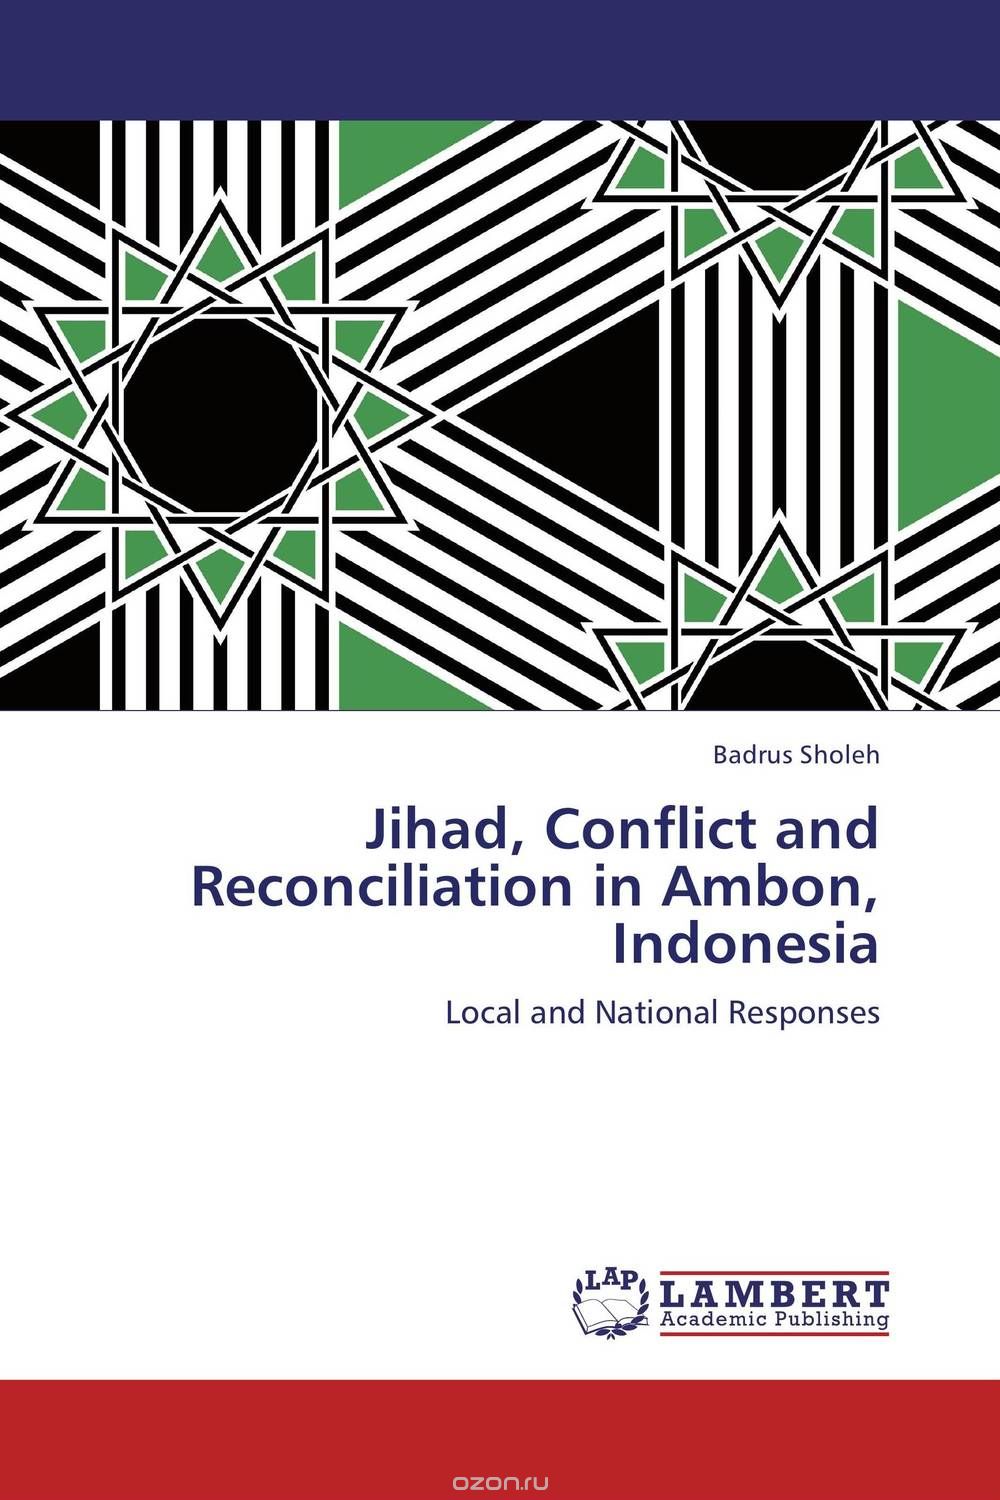 Скачать книгу "Jihad, Conflict and Reconciliation in Ambon, Indonesia"